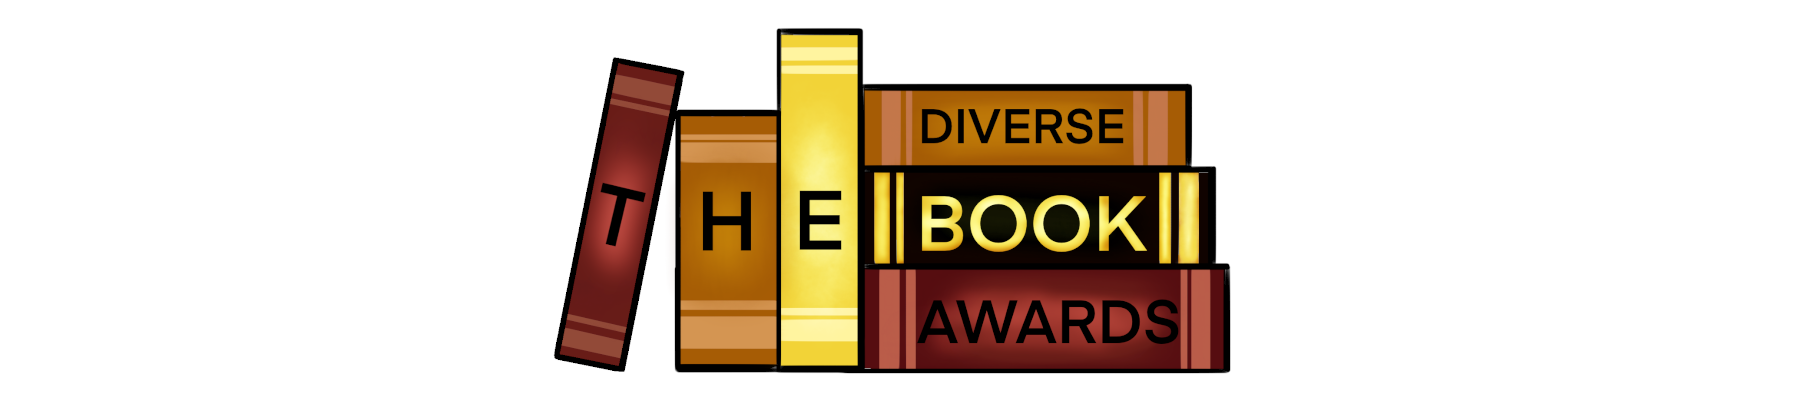 The Diverse Book Awards